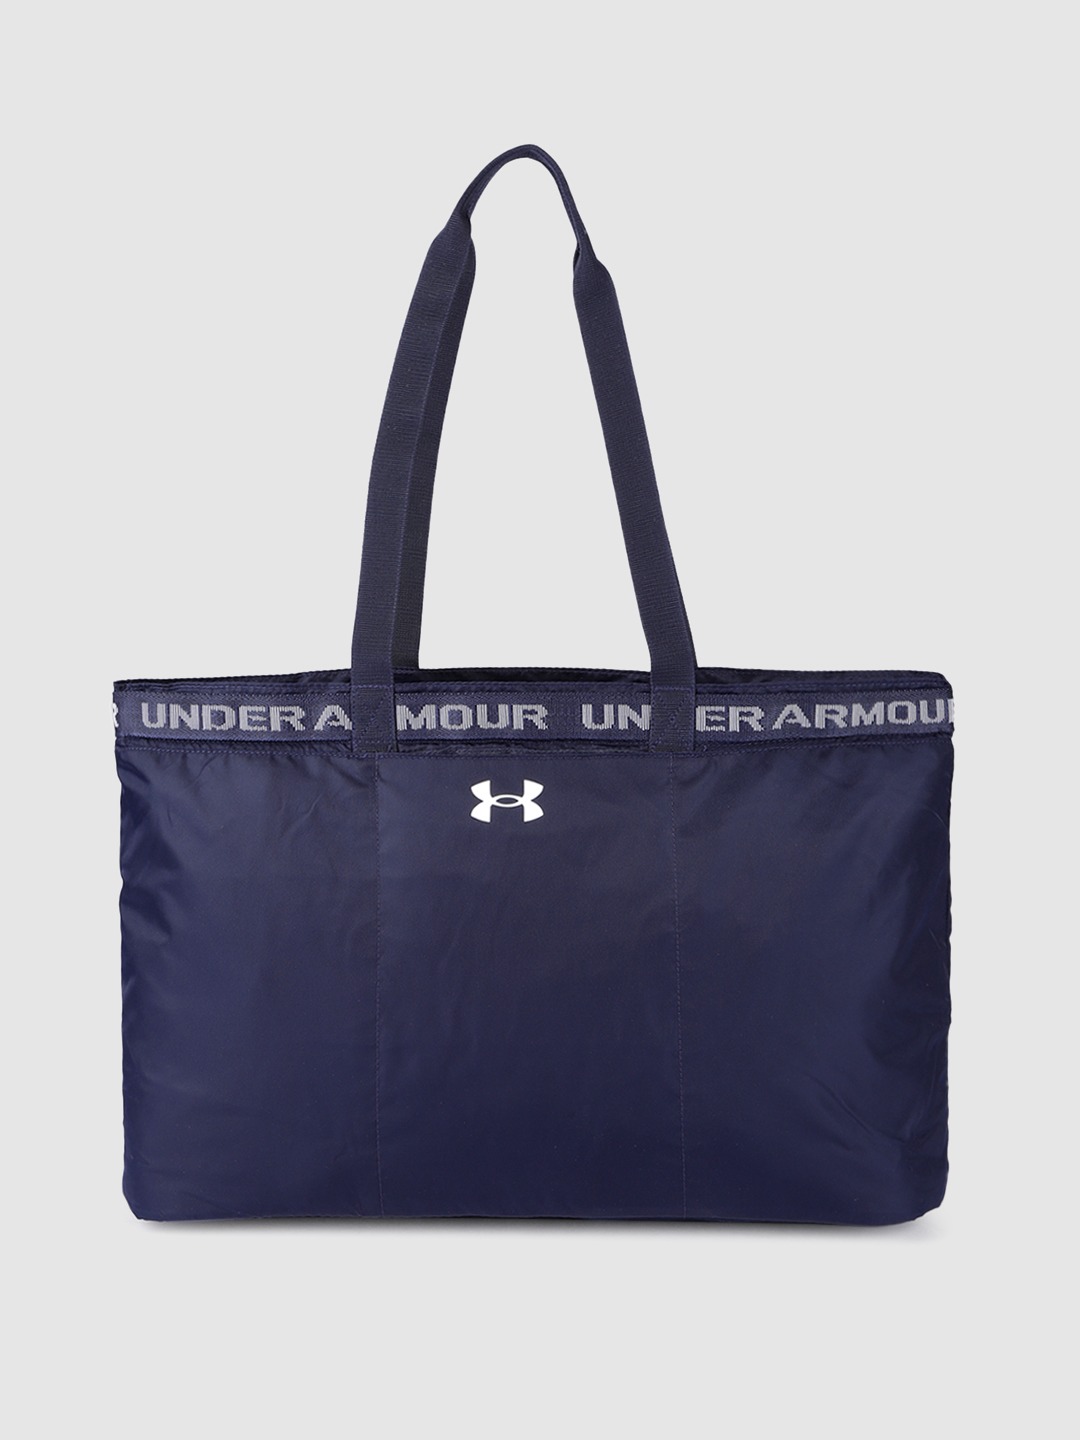 Accessories Handbags | UNDER ARMOUR Navy Blue Solid Shopper Tote Bag - JU42188